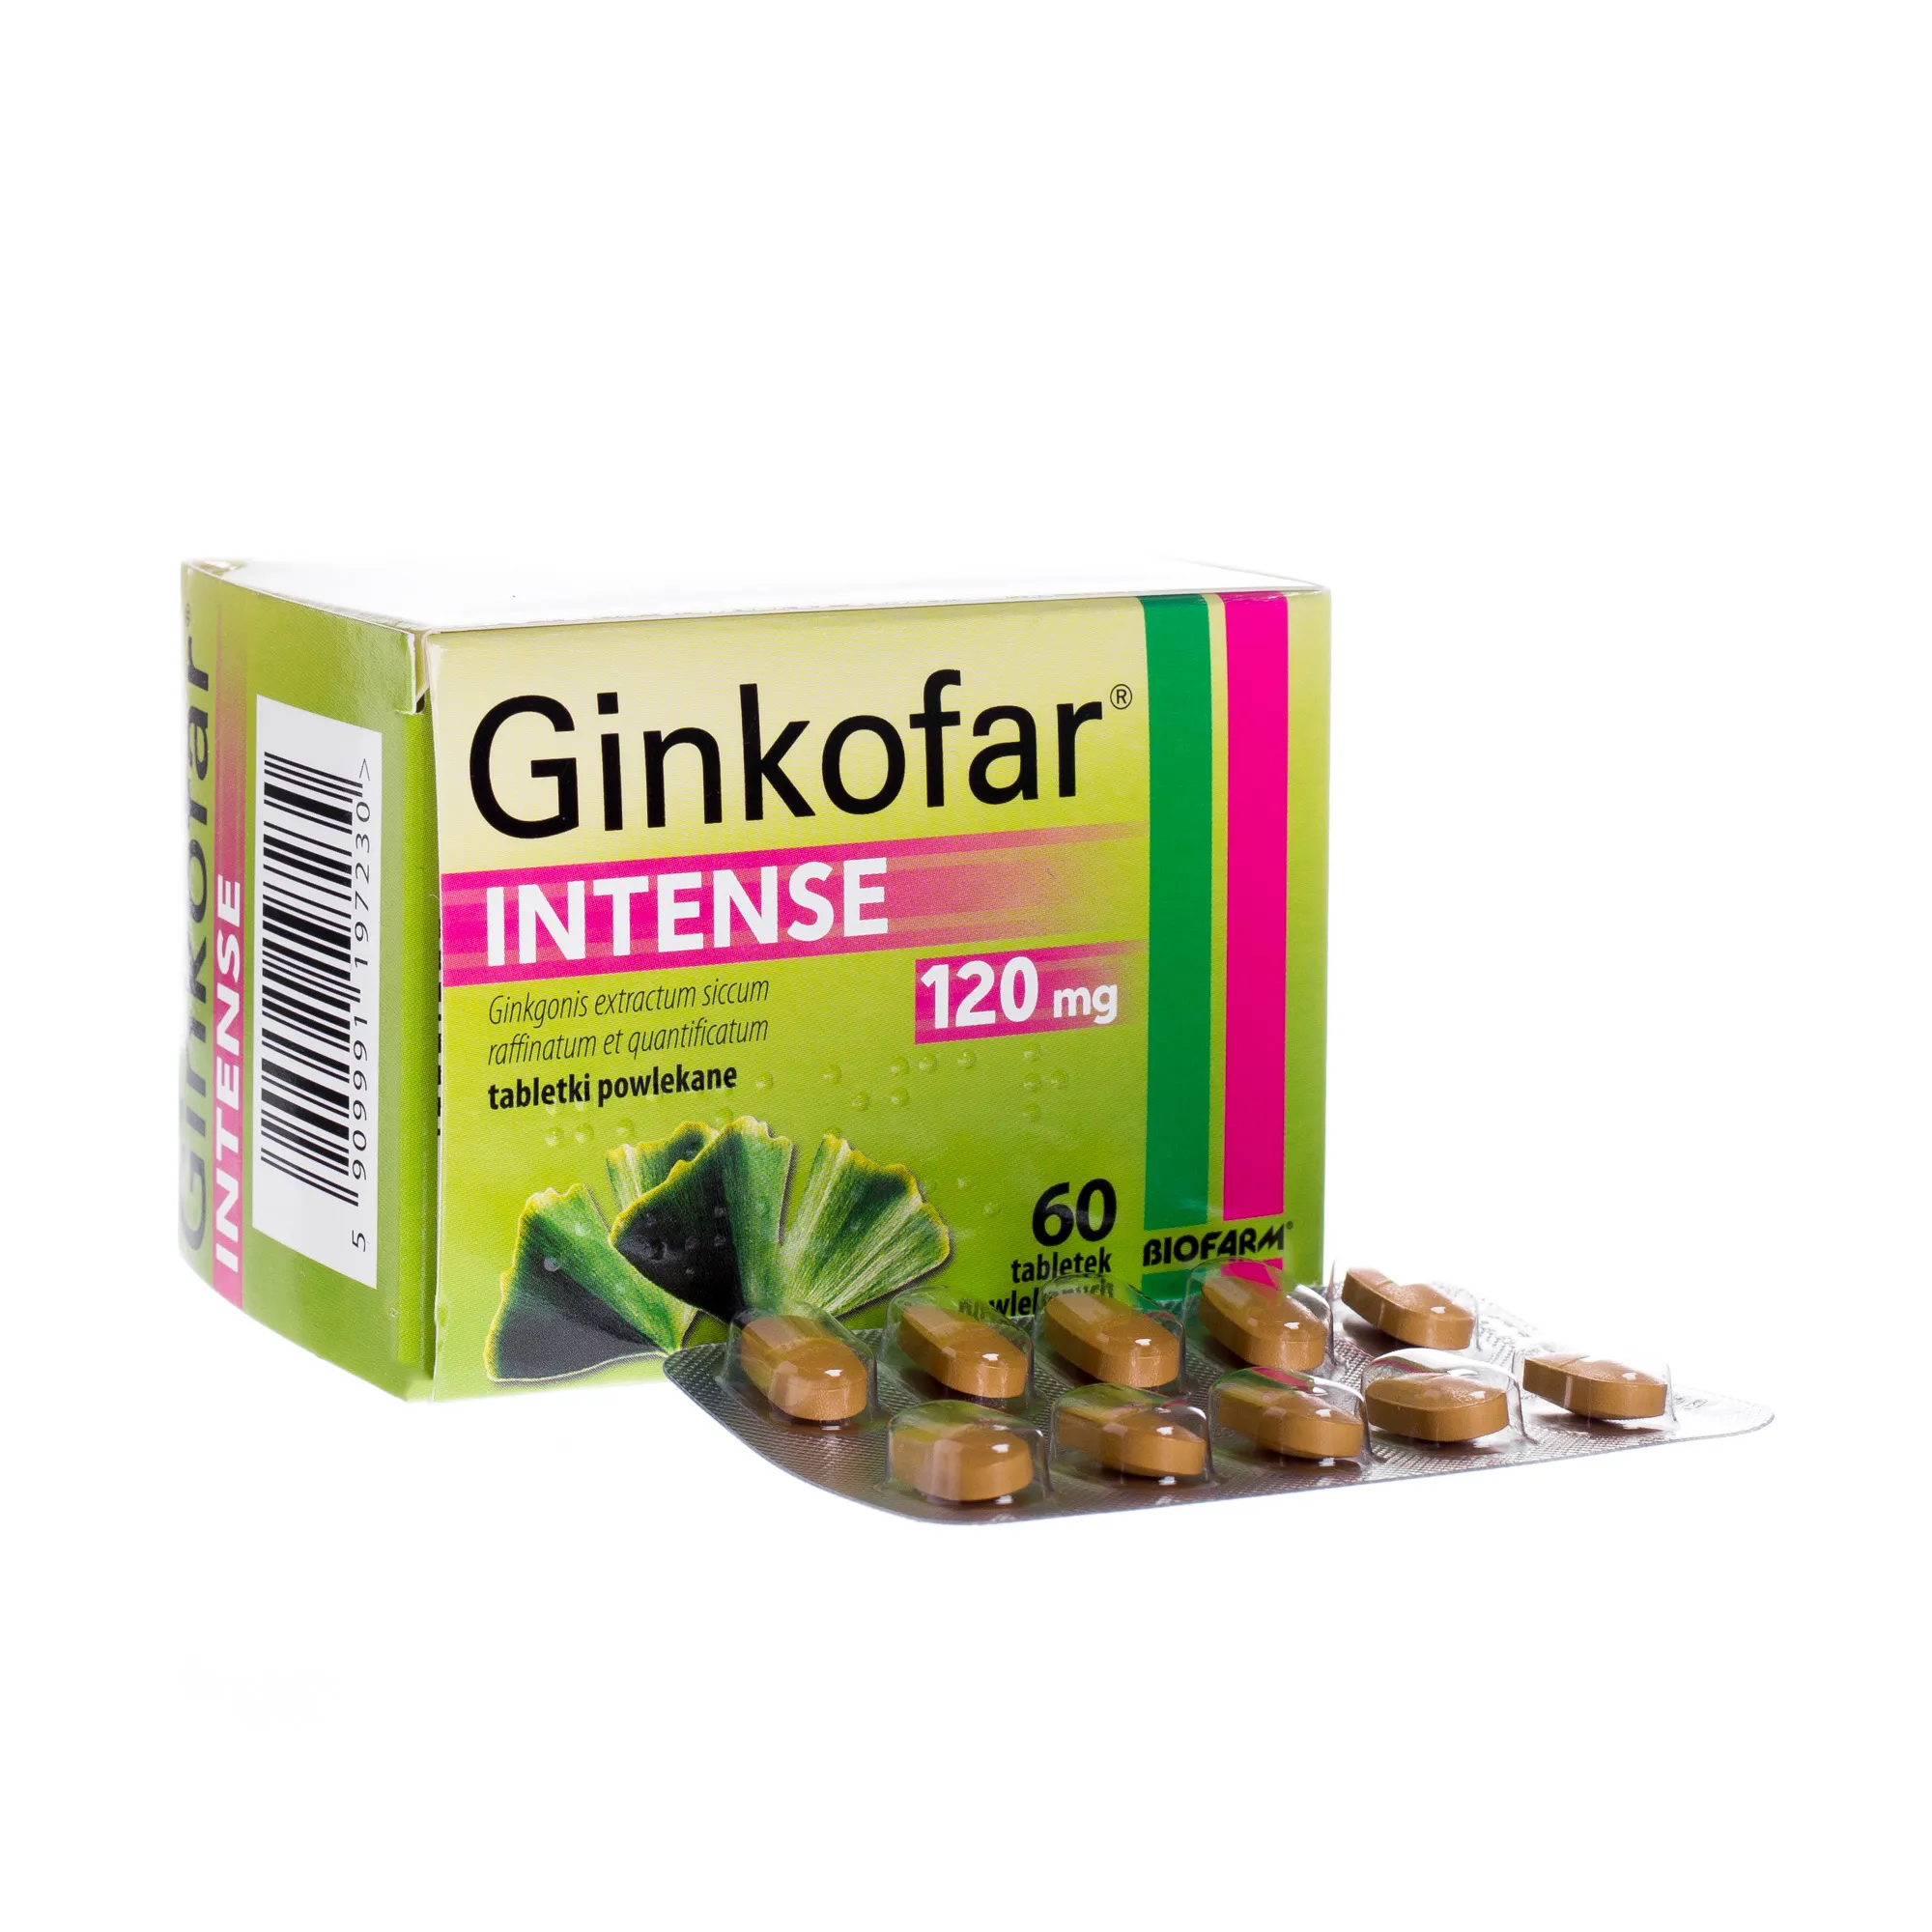 Ginkofar Intense, 120 mg, 60 tabletek powlekanych